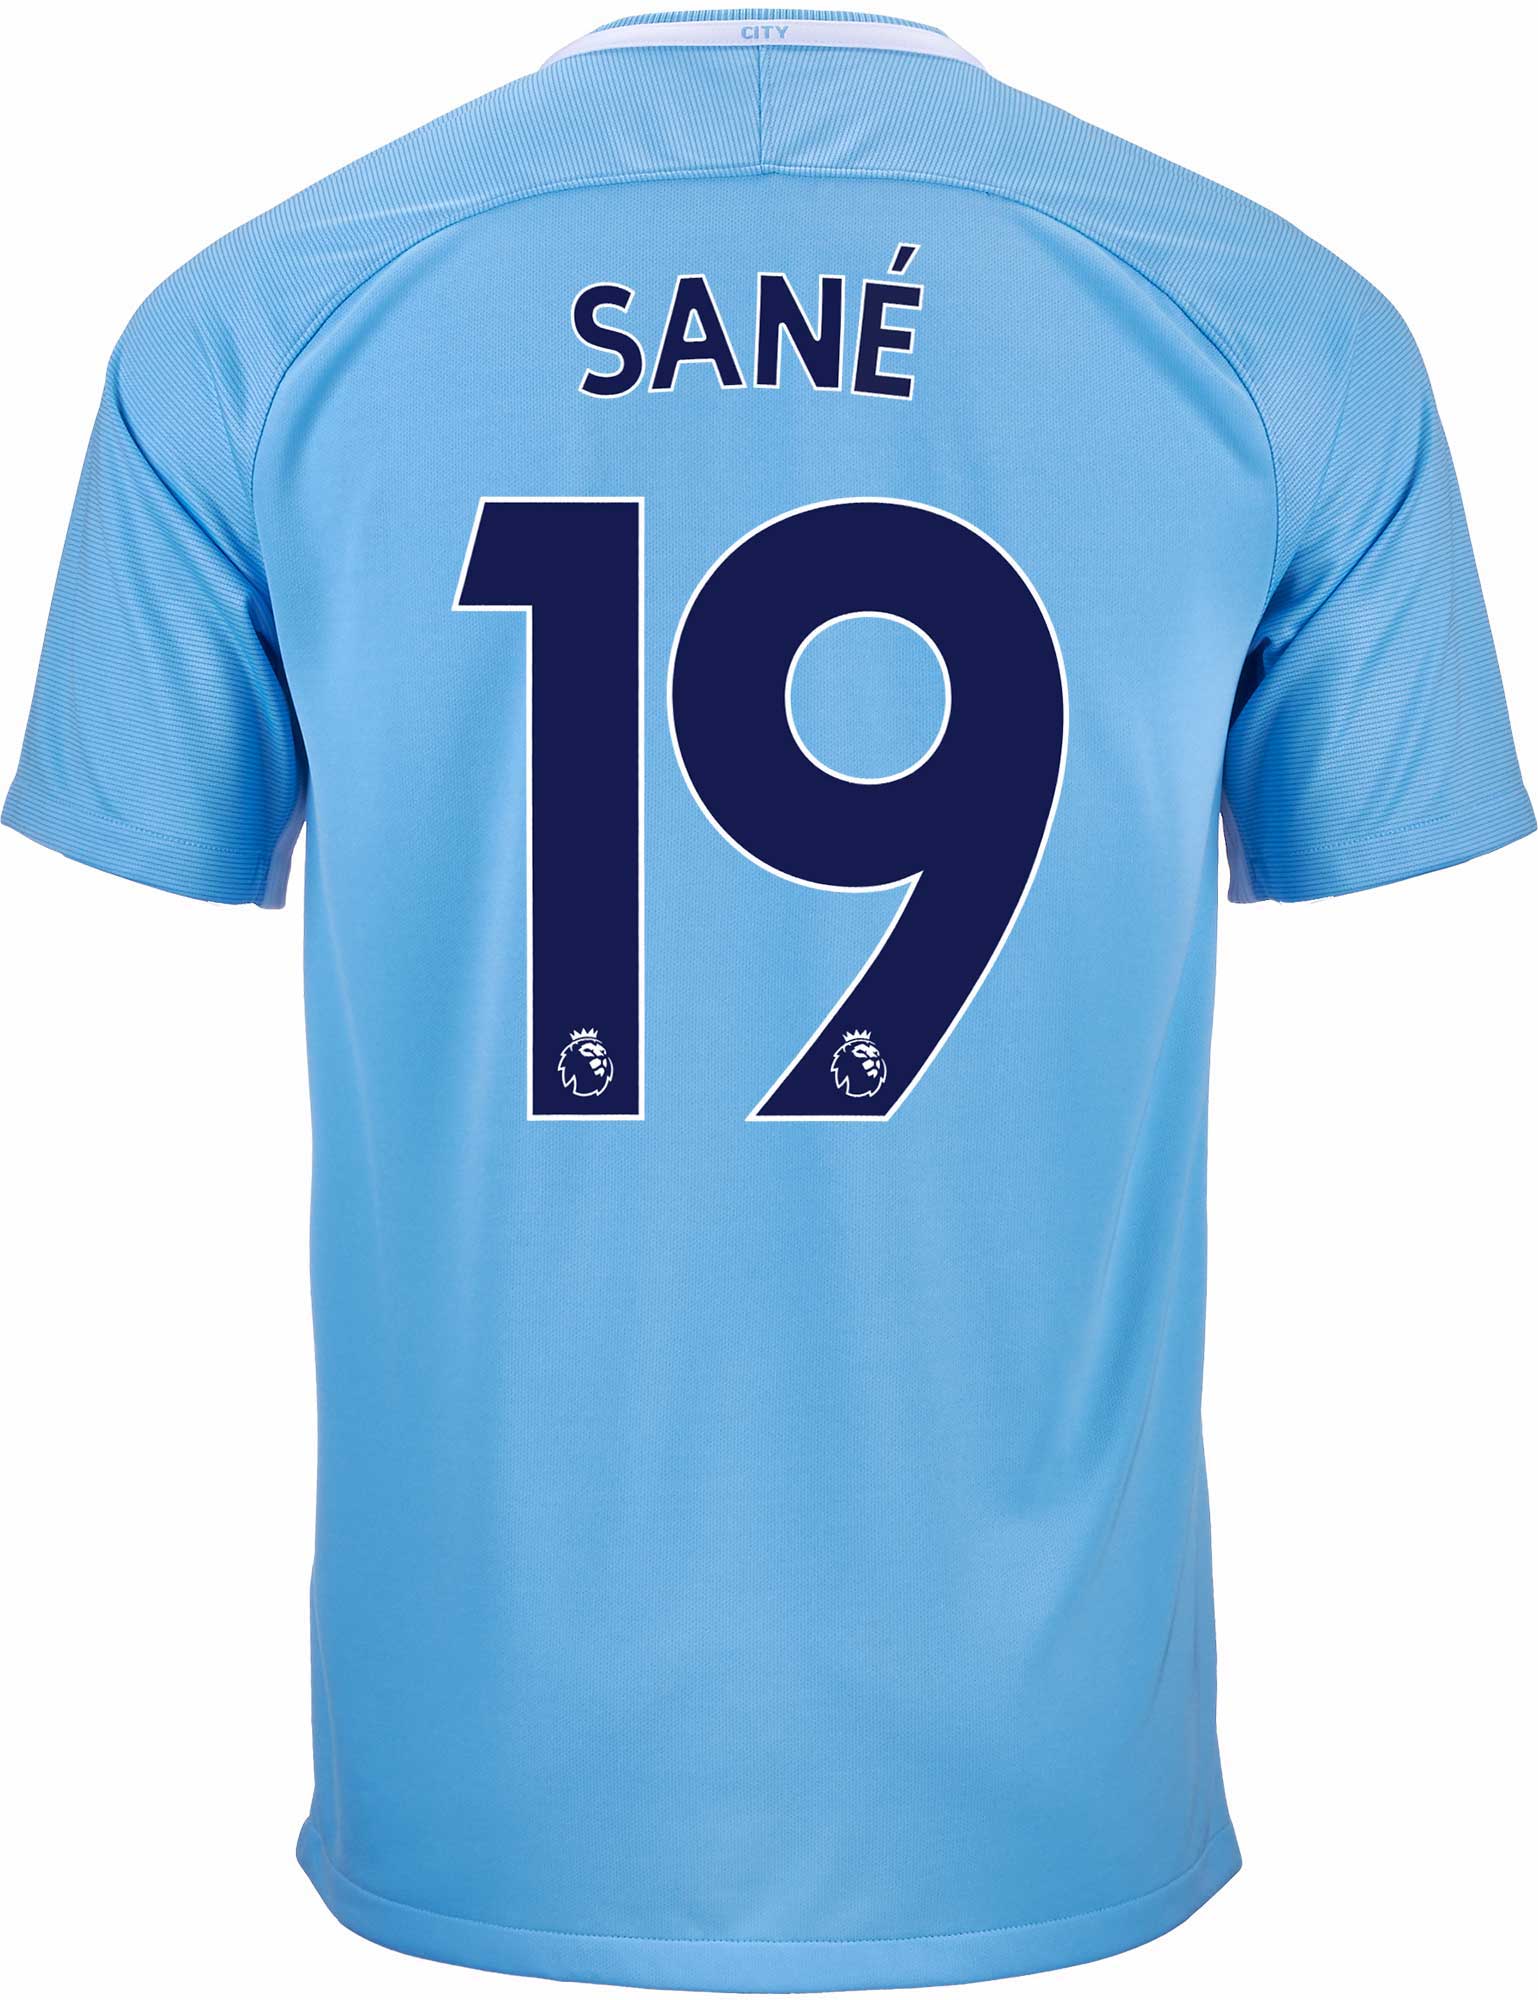 Nike Leroy Sane Manchester City Home 